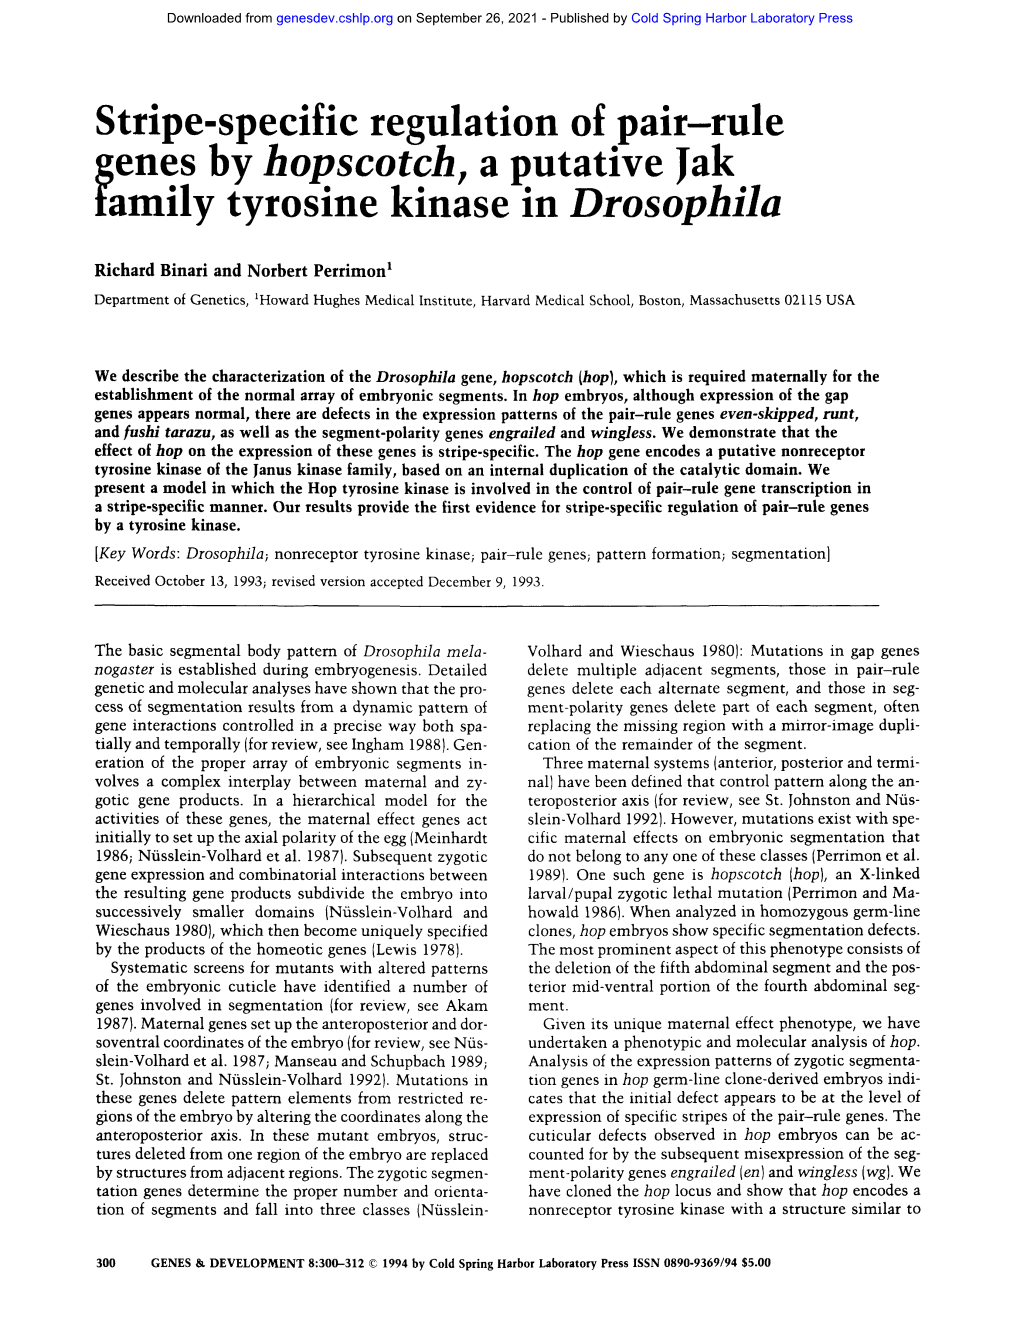 Stripe-Specific Regulation of Pair-Rule ;Enes by Hopscotch, a Putative Jak Amily Tyrosine Kinase in Drosophila